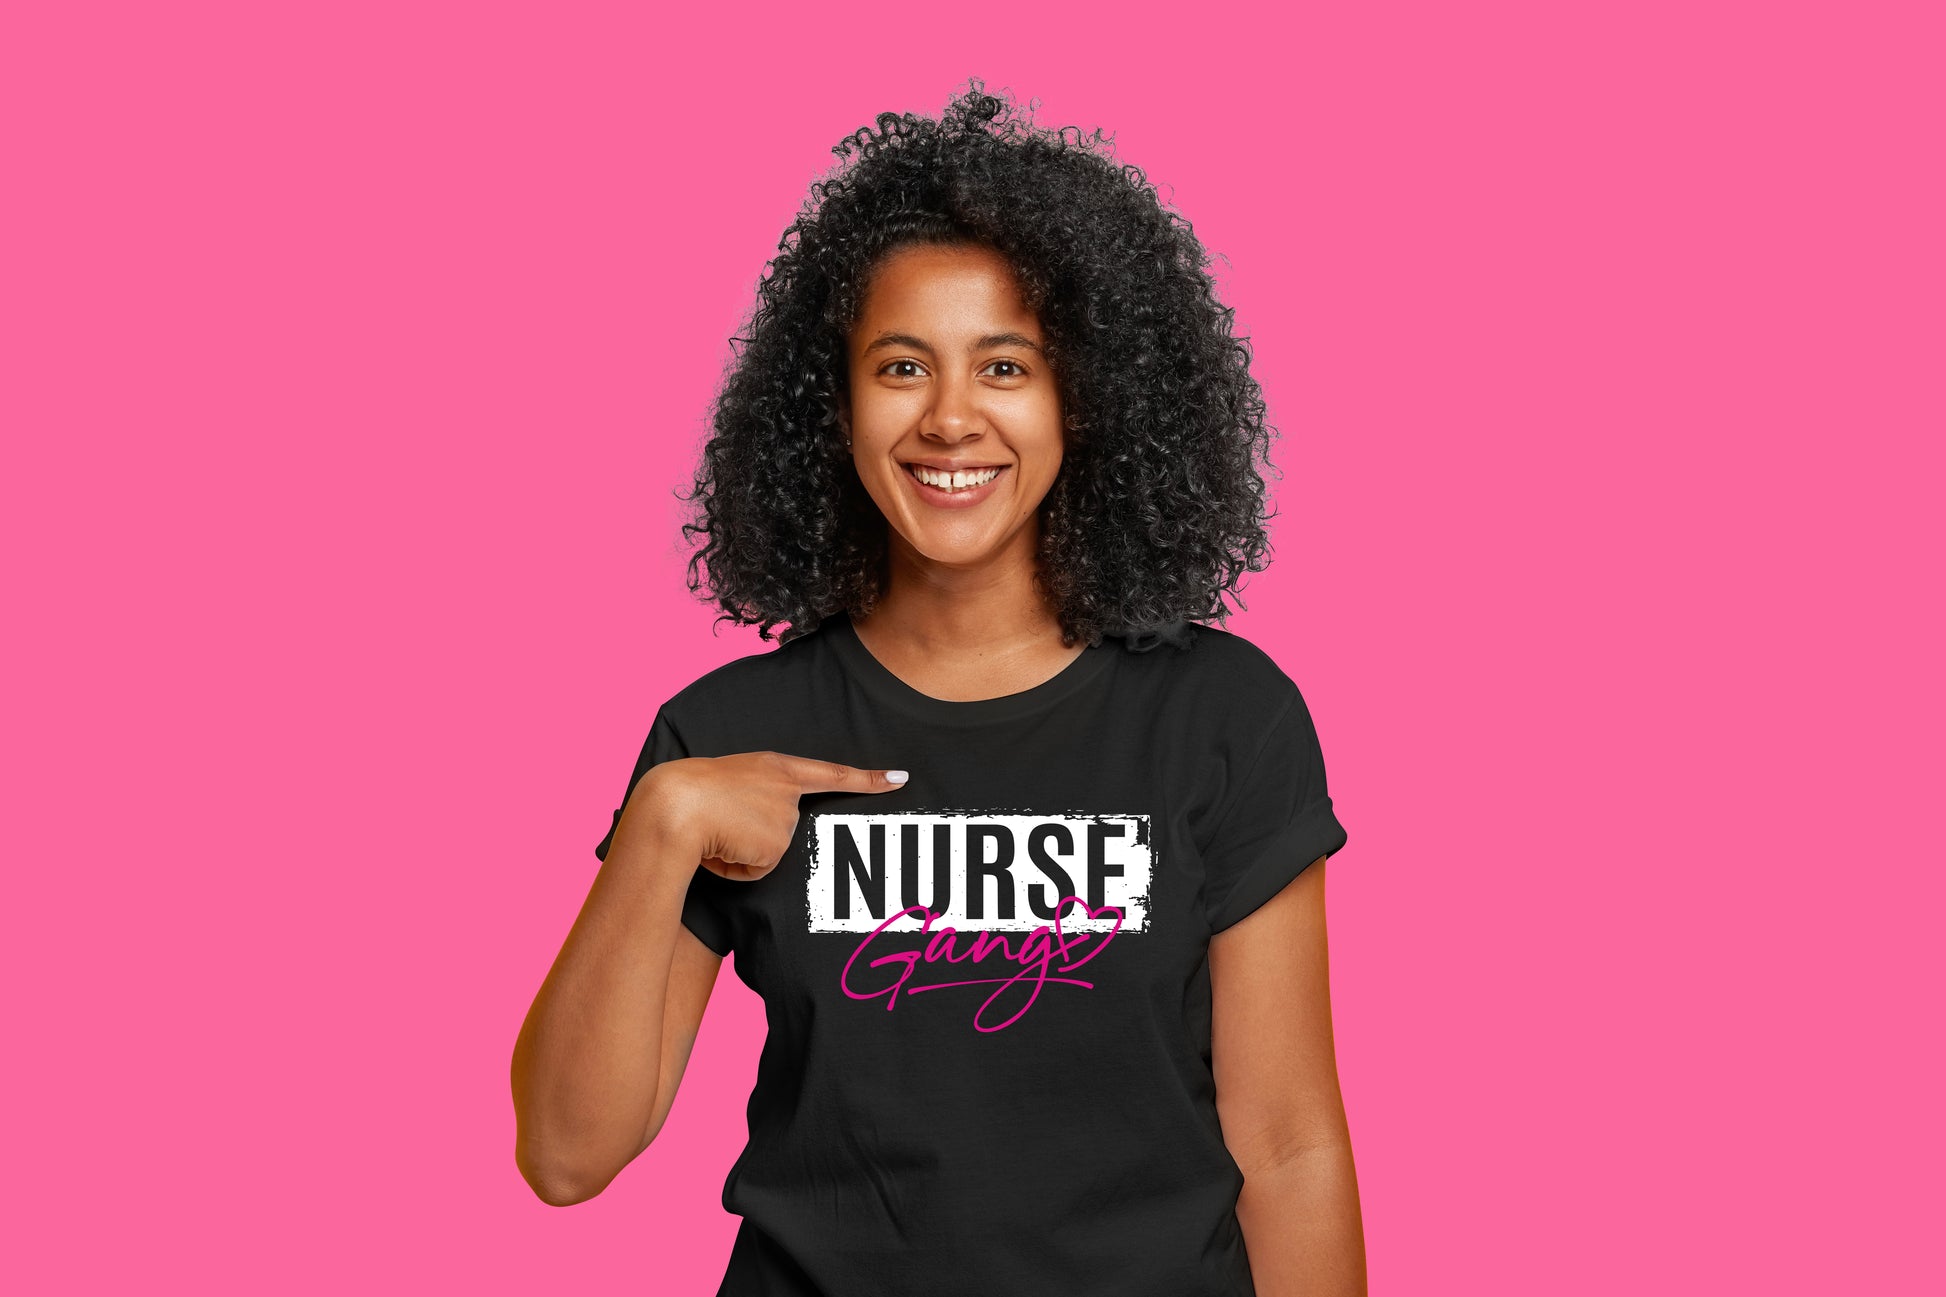 Nurses in the News - Nurse Gang Tee – The Nurse Innovator